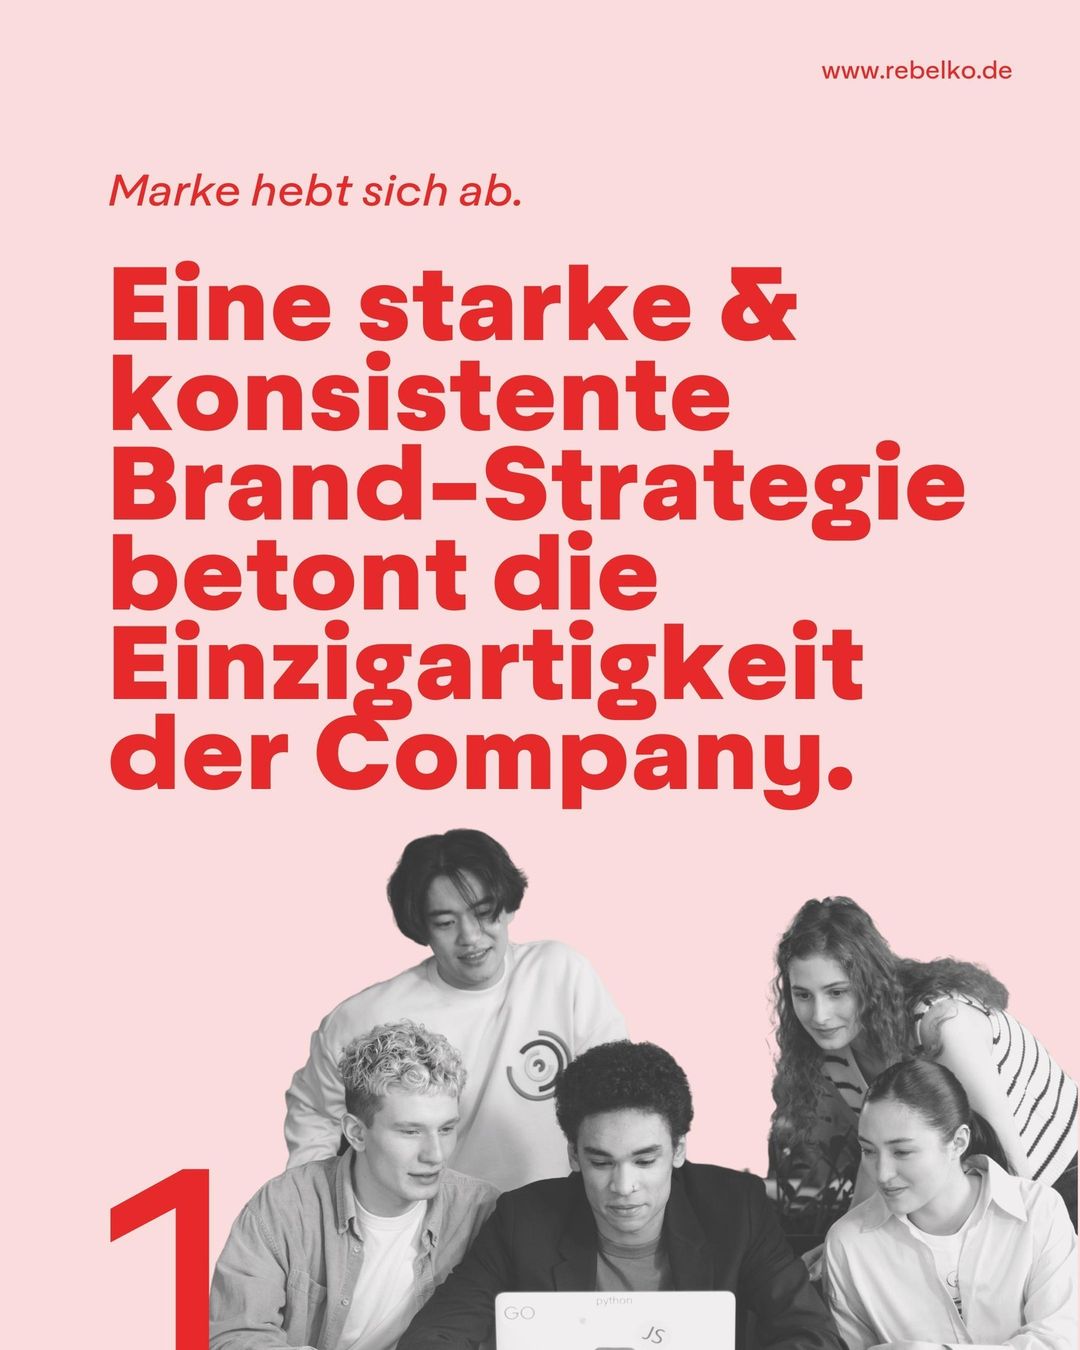 5 gruende fuer brand strategien REBELKO Agentur Aachen Marketing  Design Kreativ Strategie Social Media Konzeption Beratung Creatives Digital 03